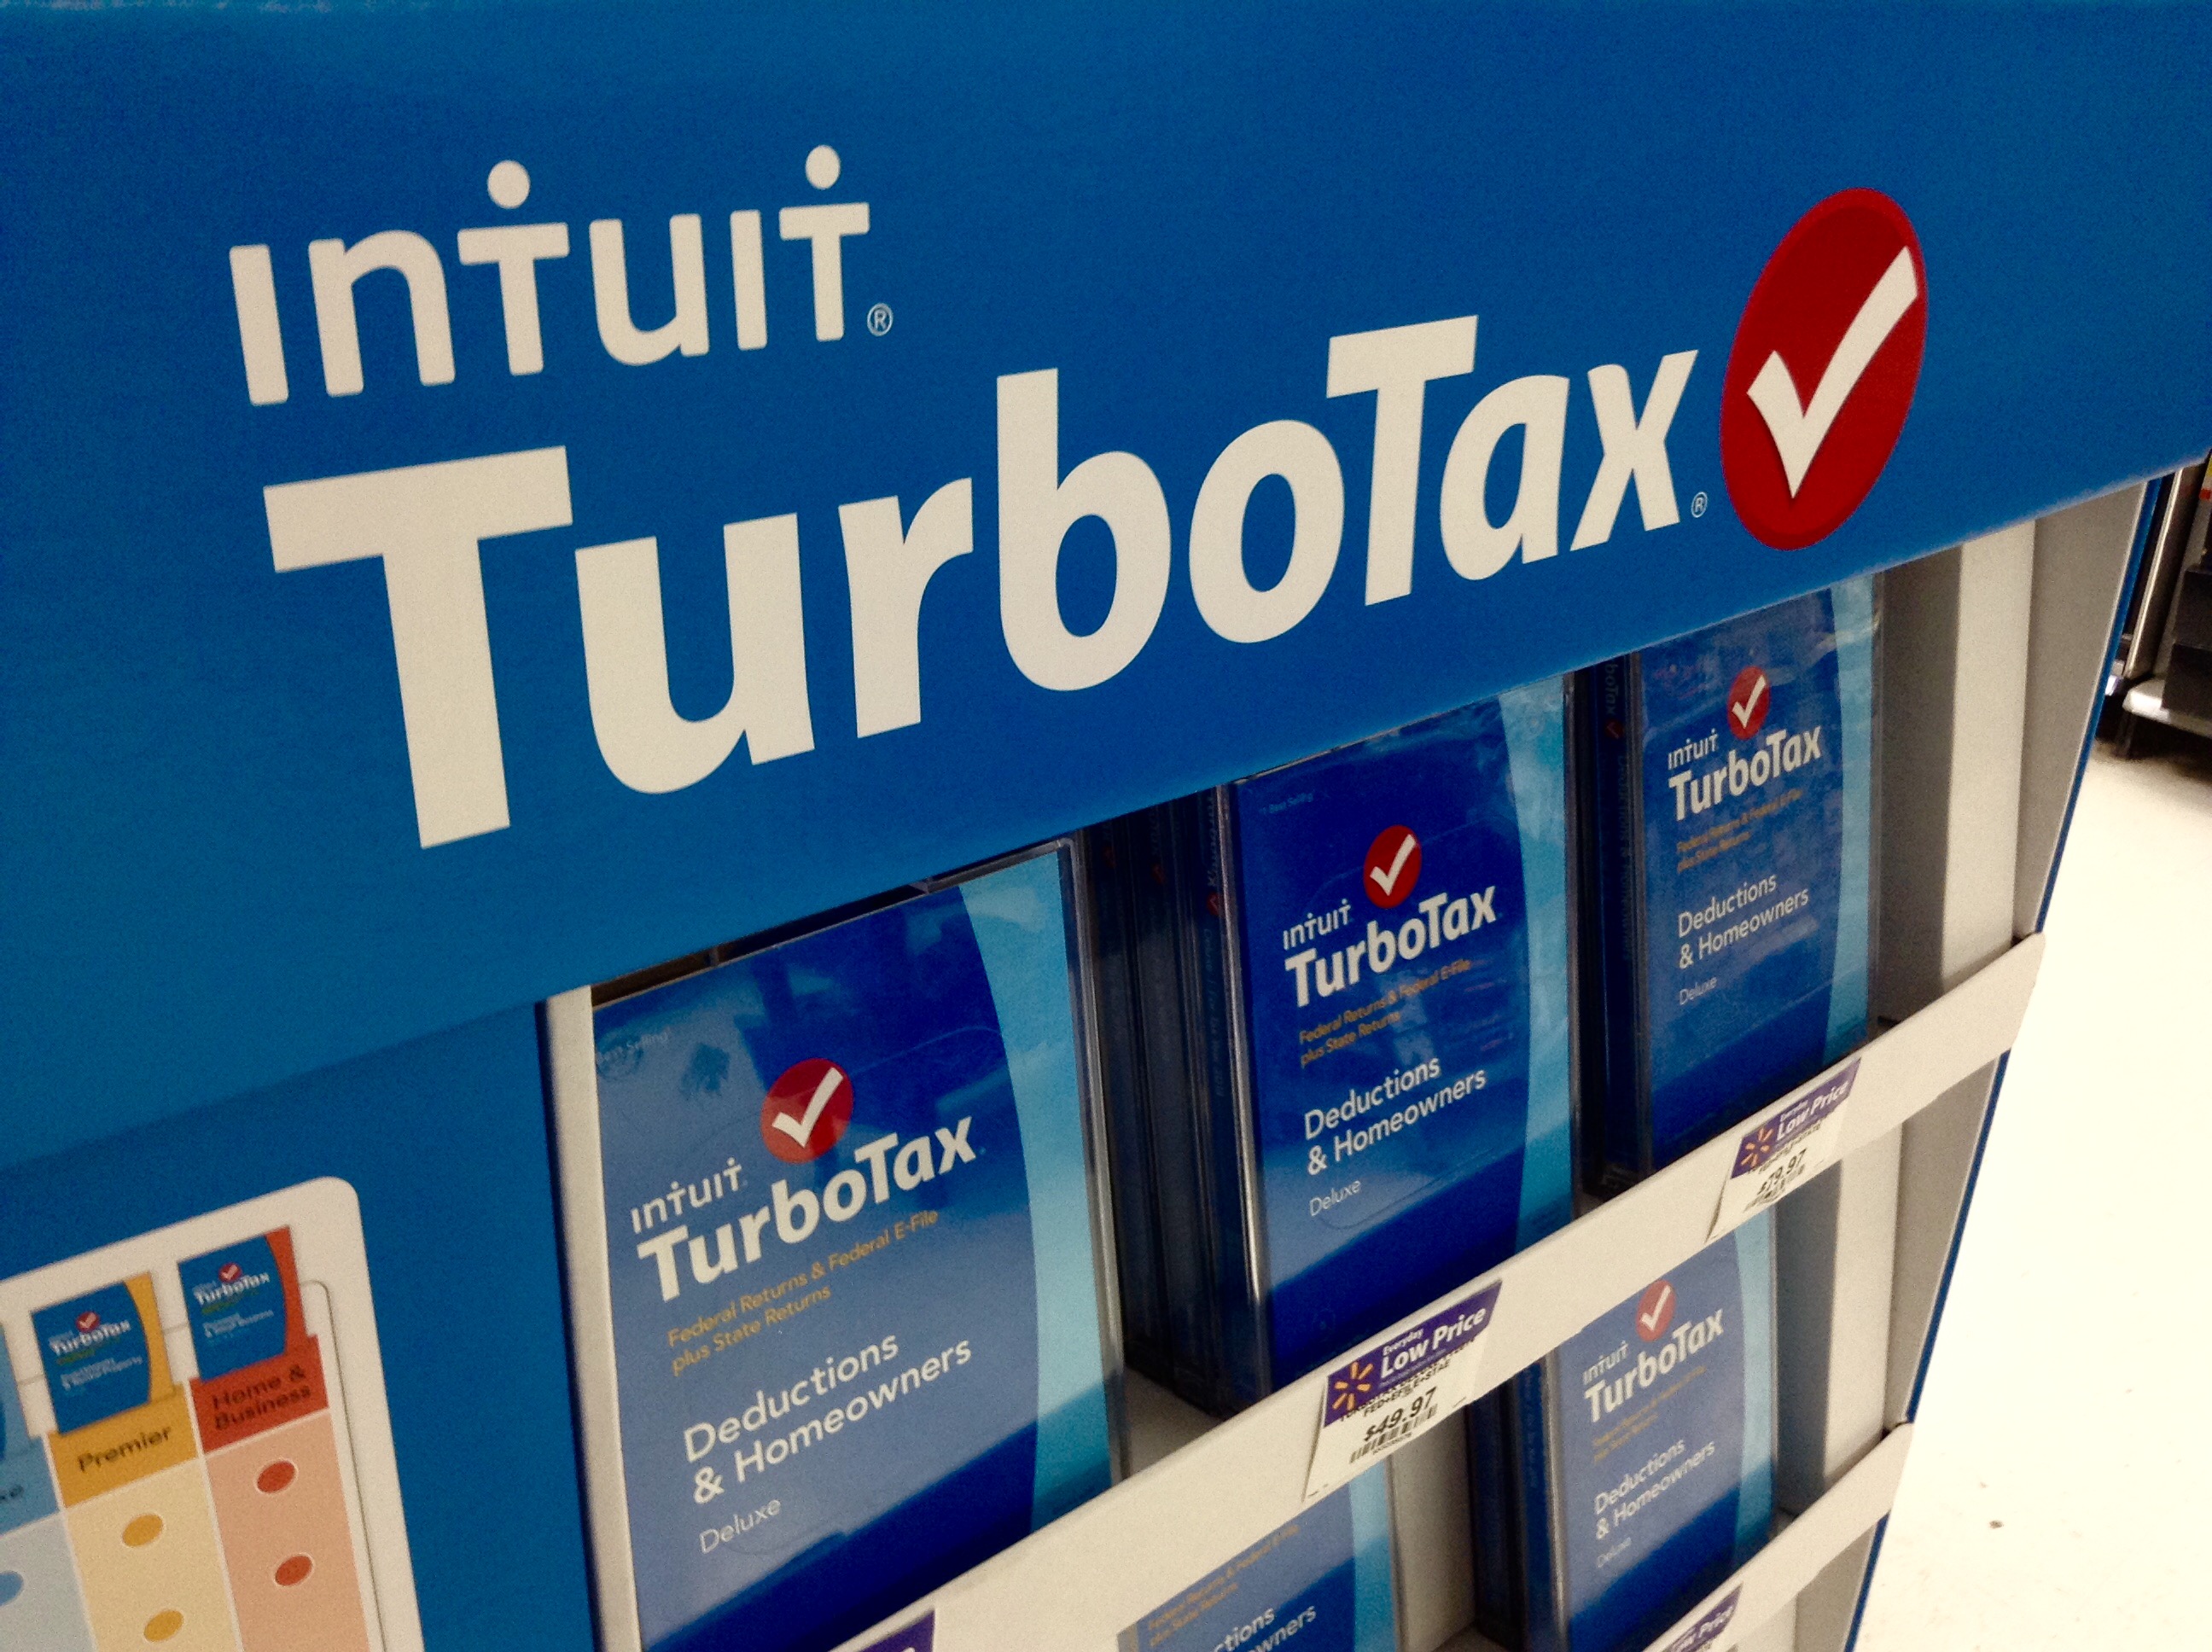 Intuit TurboTax store display